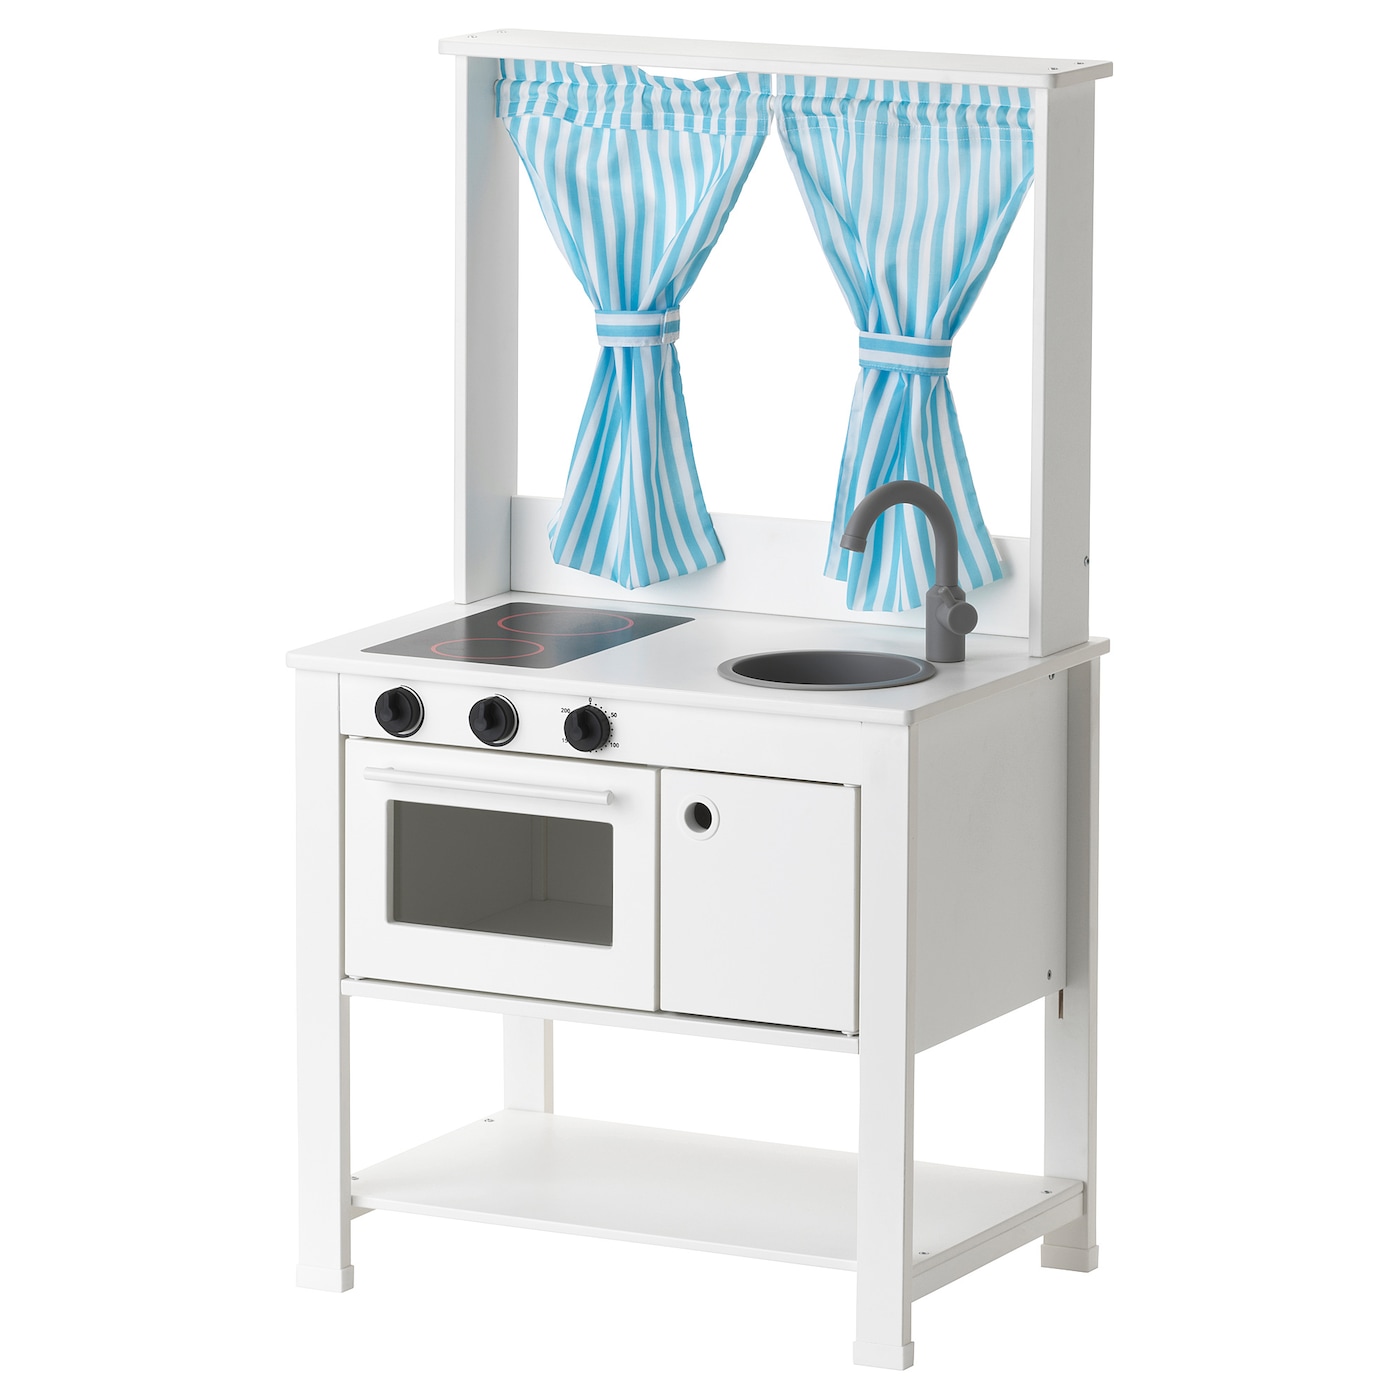 Кухня детская - IKEA SPISIG/CПИСИГ ИКЕА, 37х55х98 см, белый/голубой